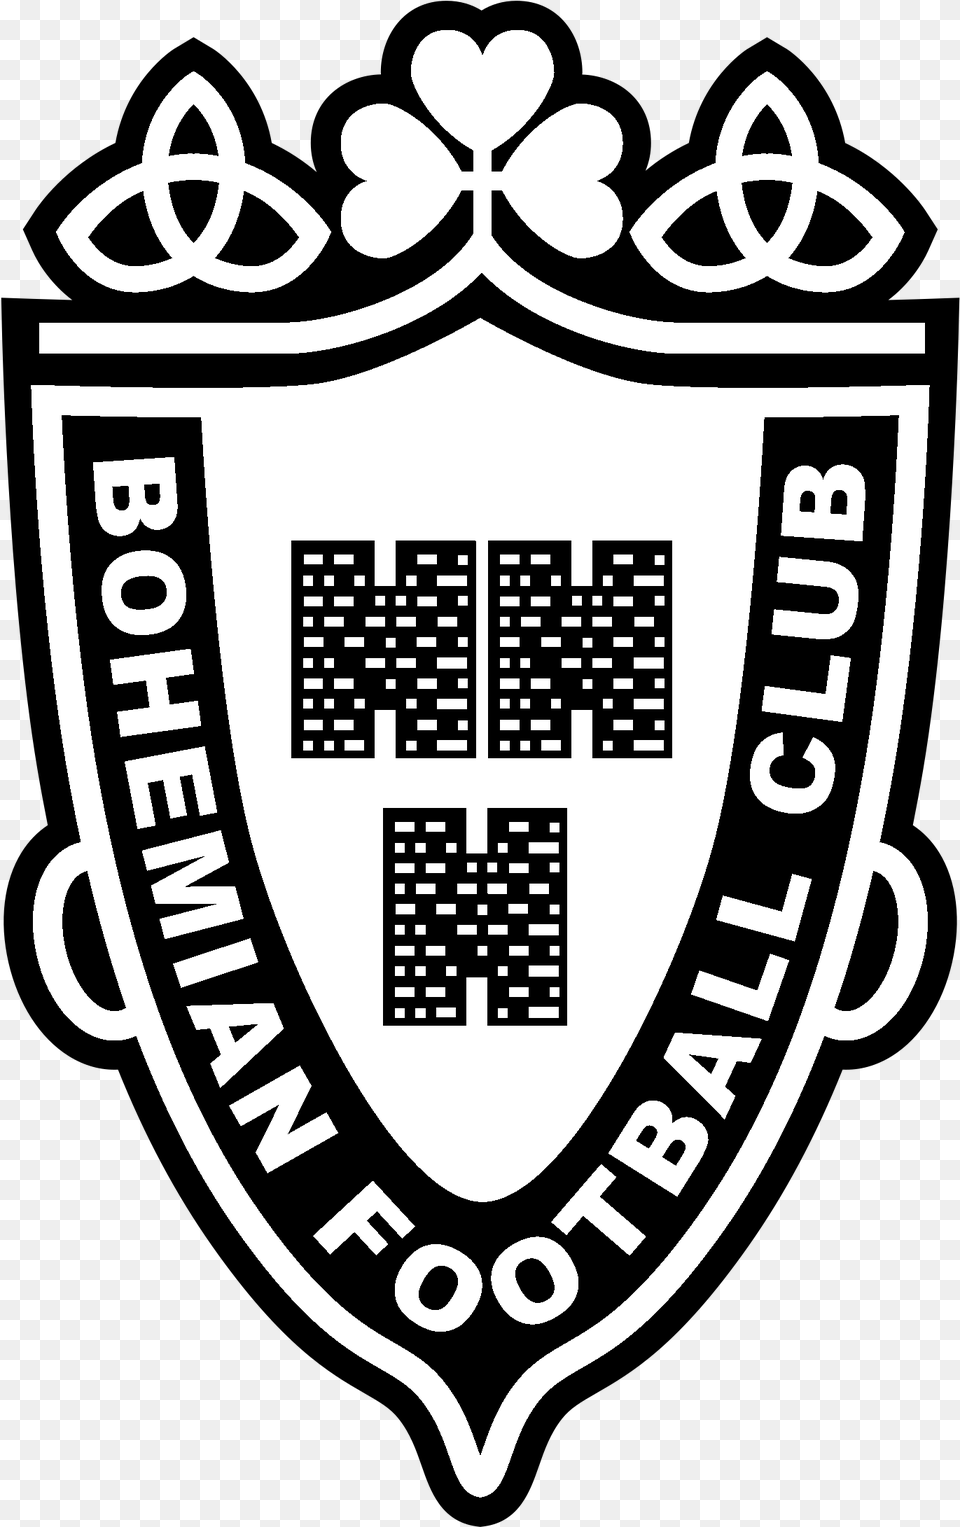 Bohemian 7827 Logo Black And White Bohemian Fc, Qr Code, Emblem, Symbol, Armor Png